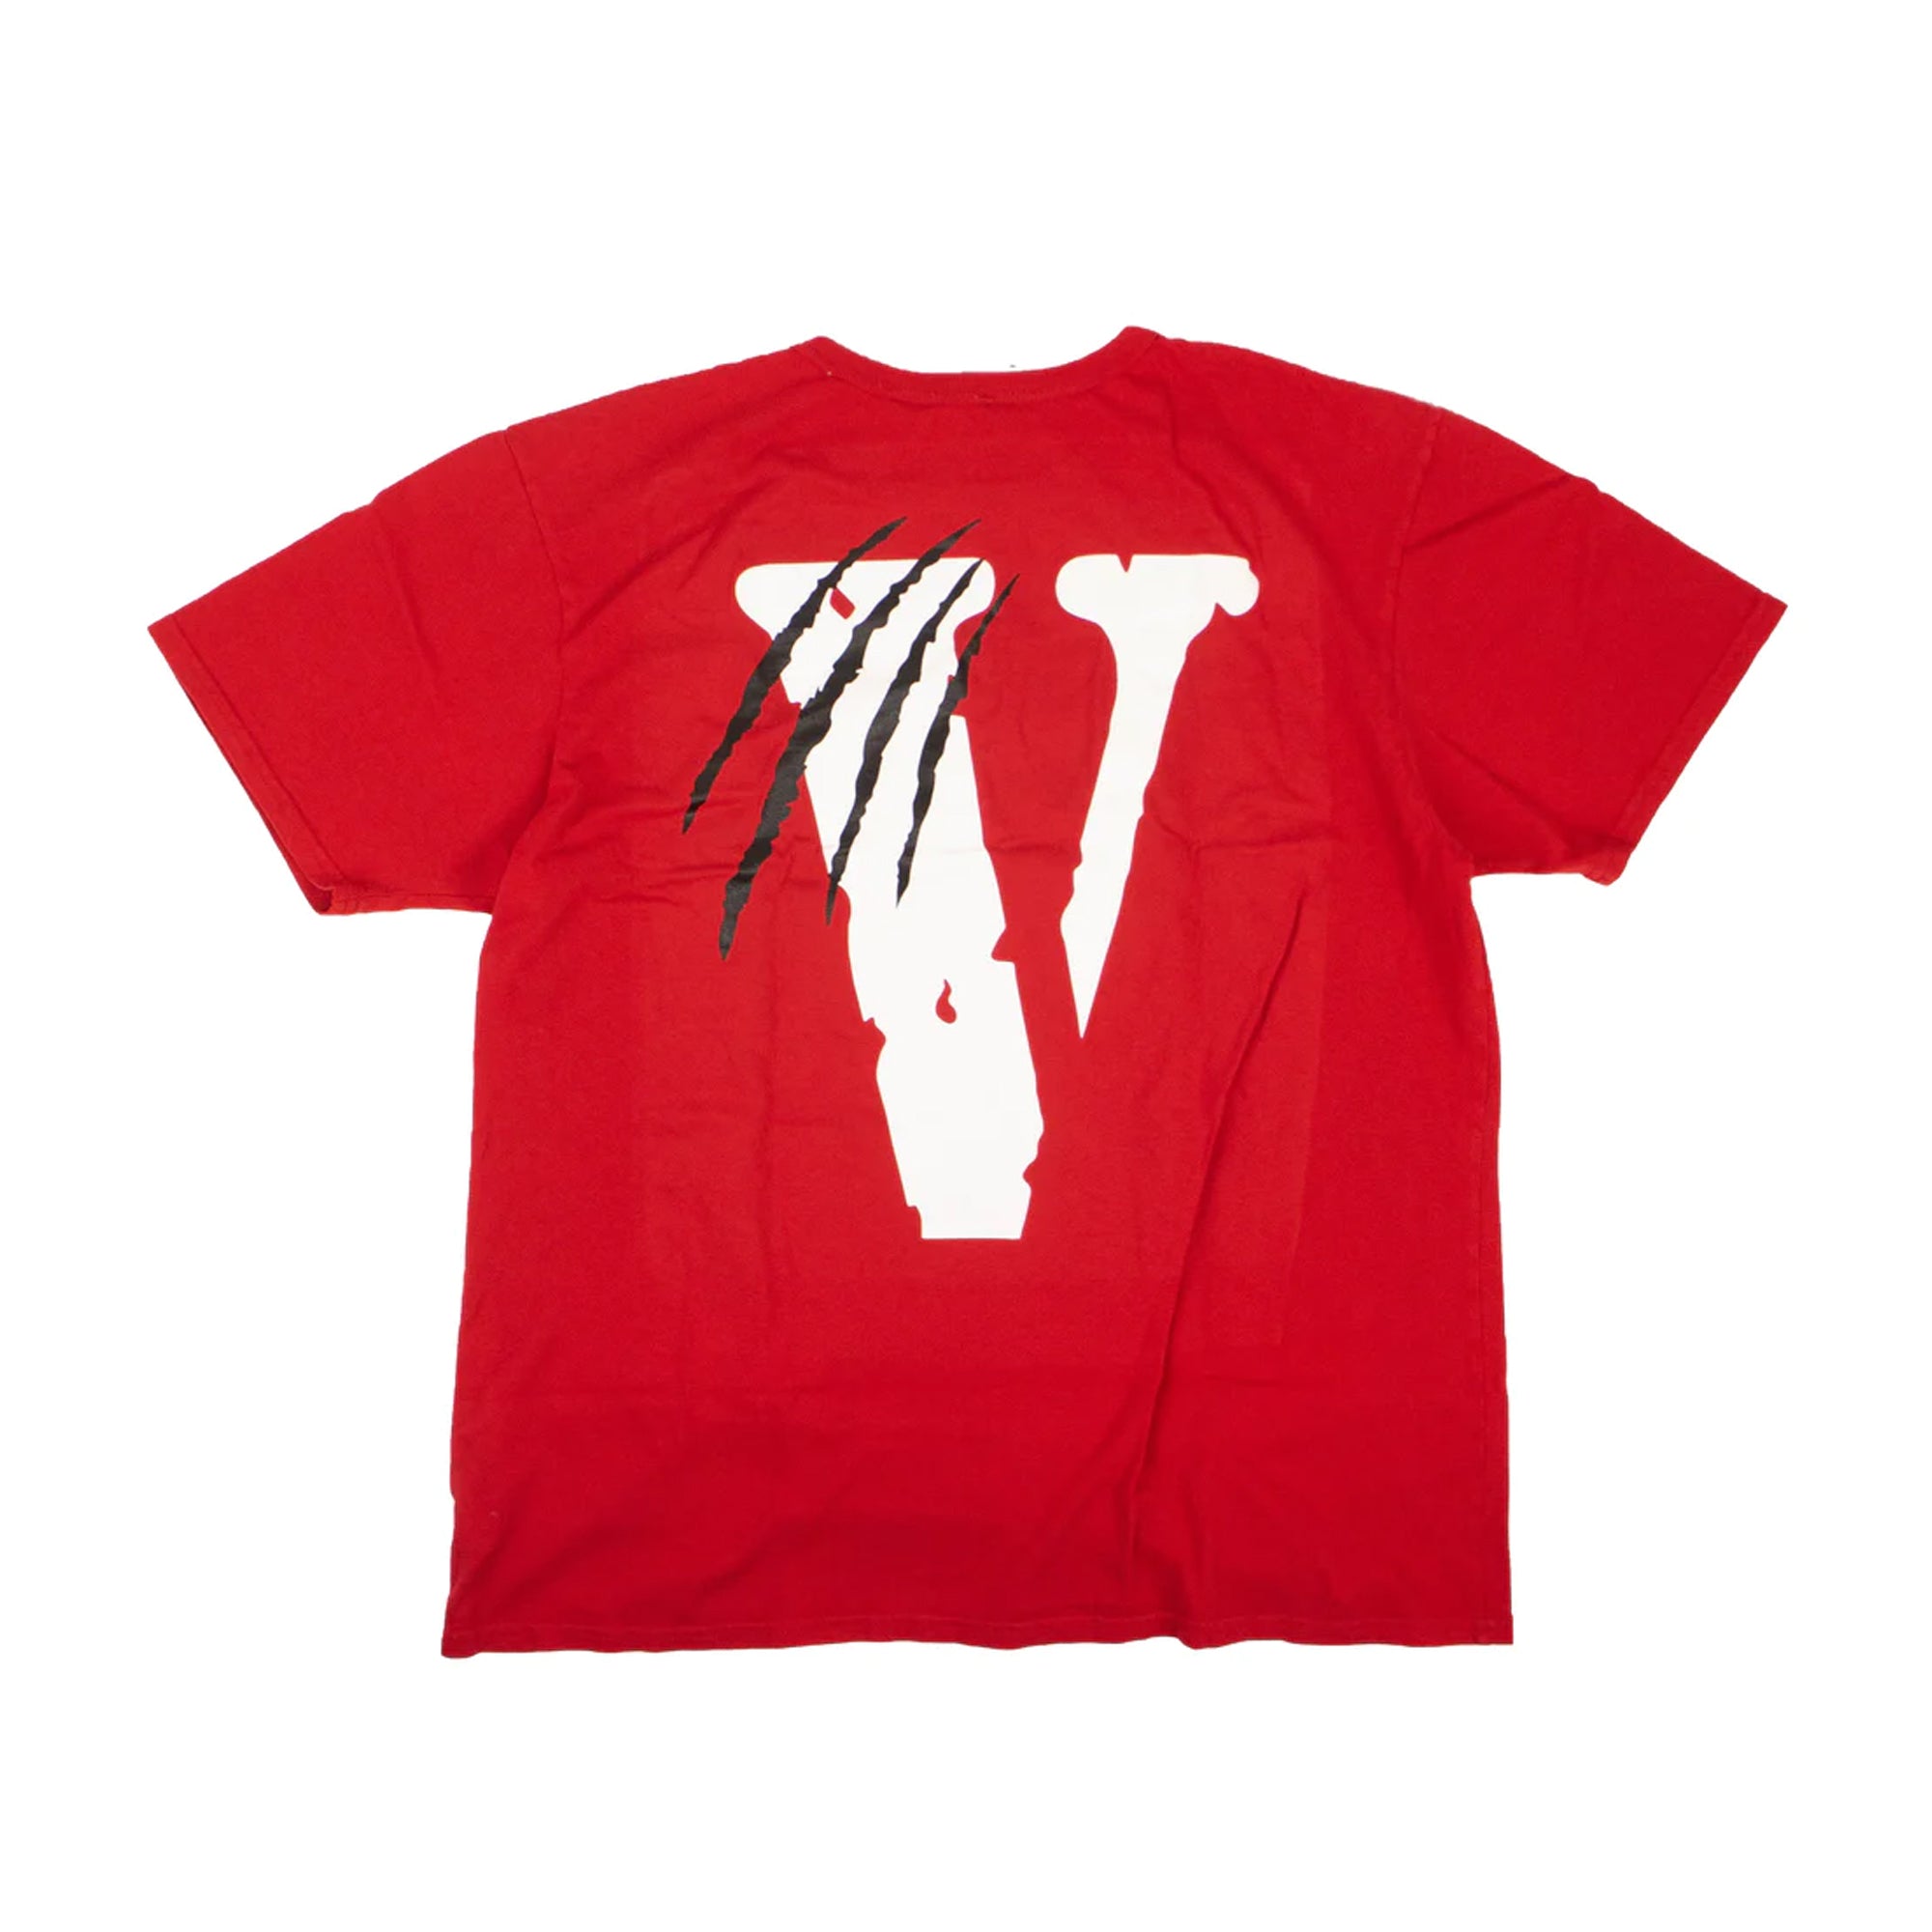 Vlone Panther Cotton Red T-Shirt